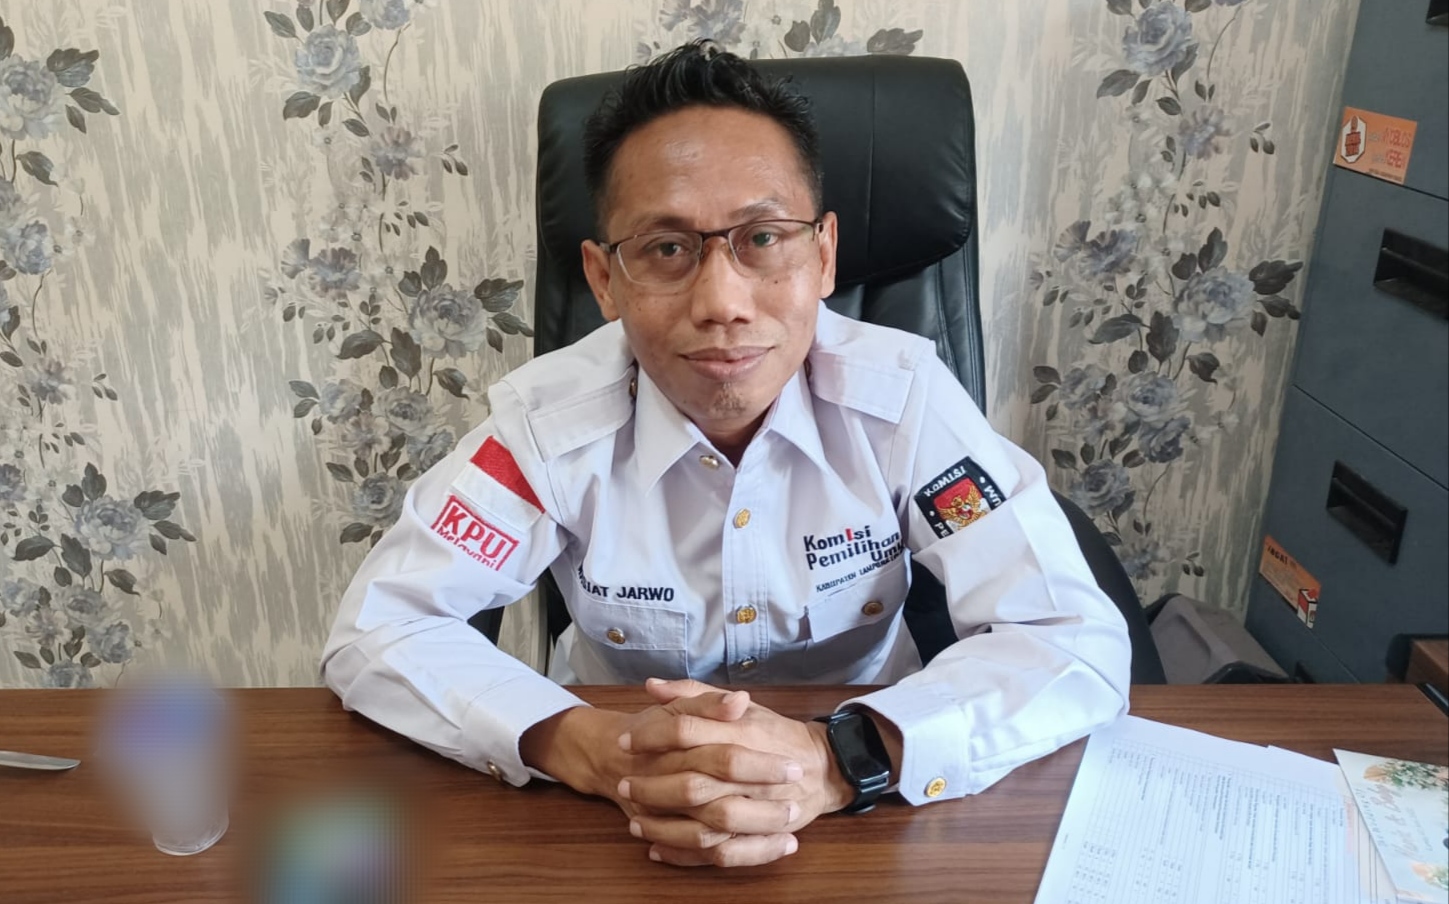 Verifikasi Berkas Pendaftar Calon PPK Lampung Timur